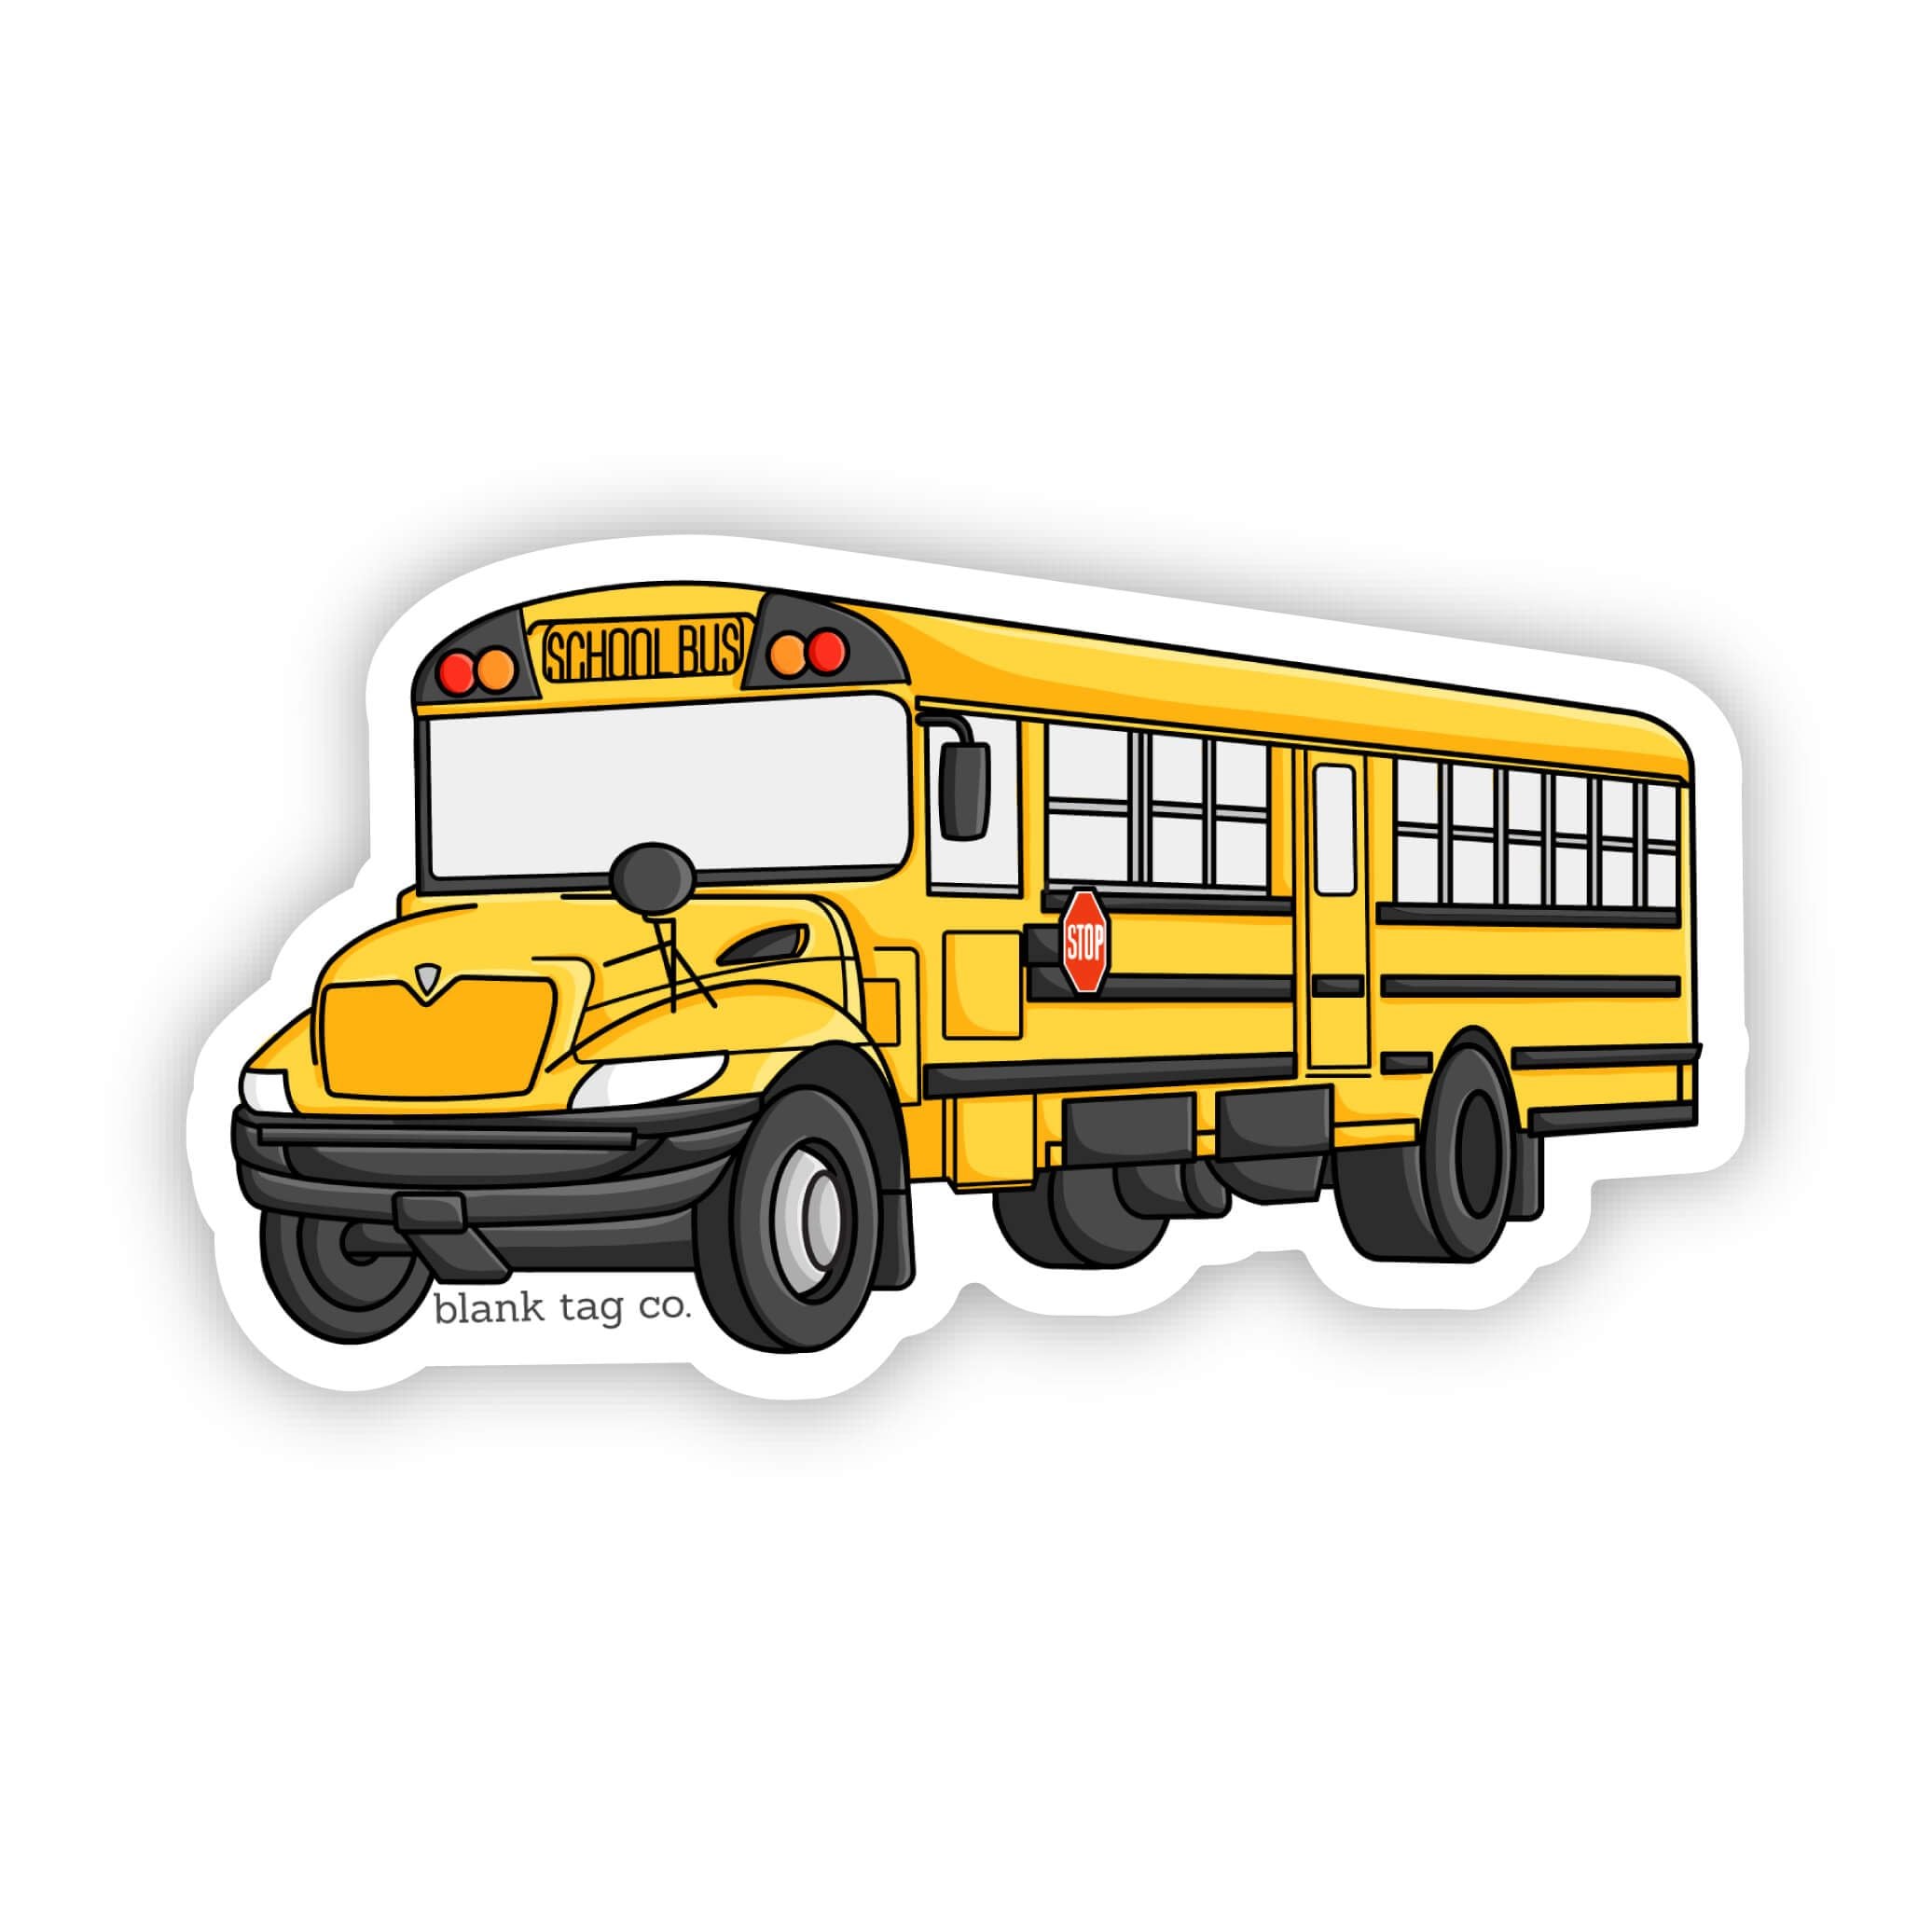 The School Bus Sticker